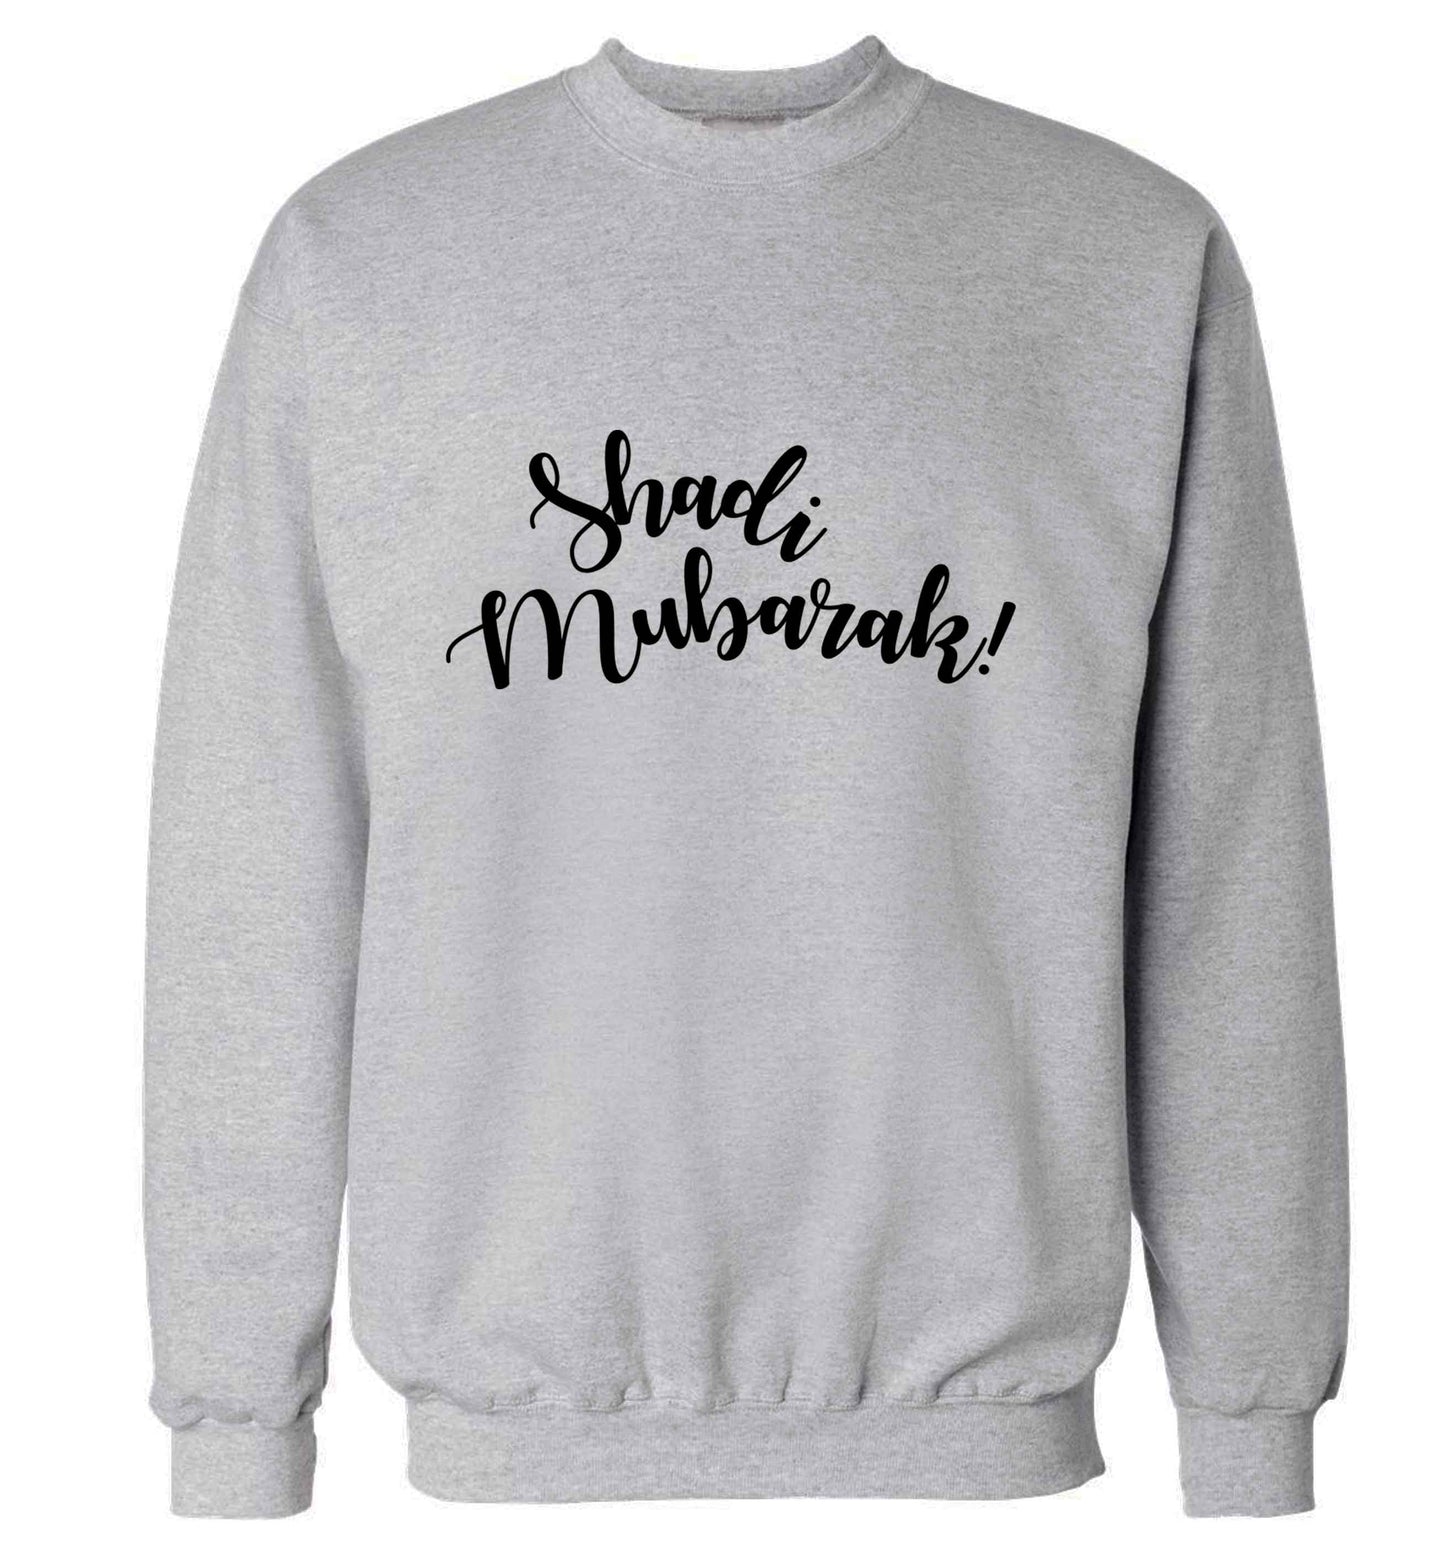 Shadi mubarak adult's unisex grey sweater 2XL